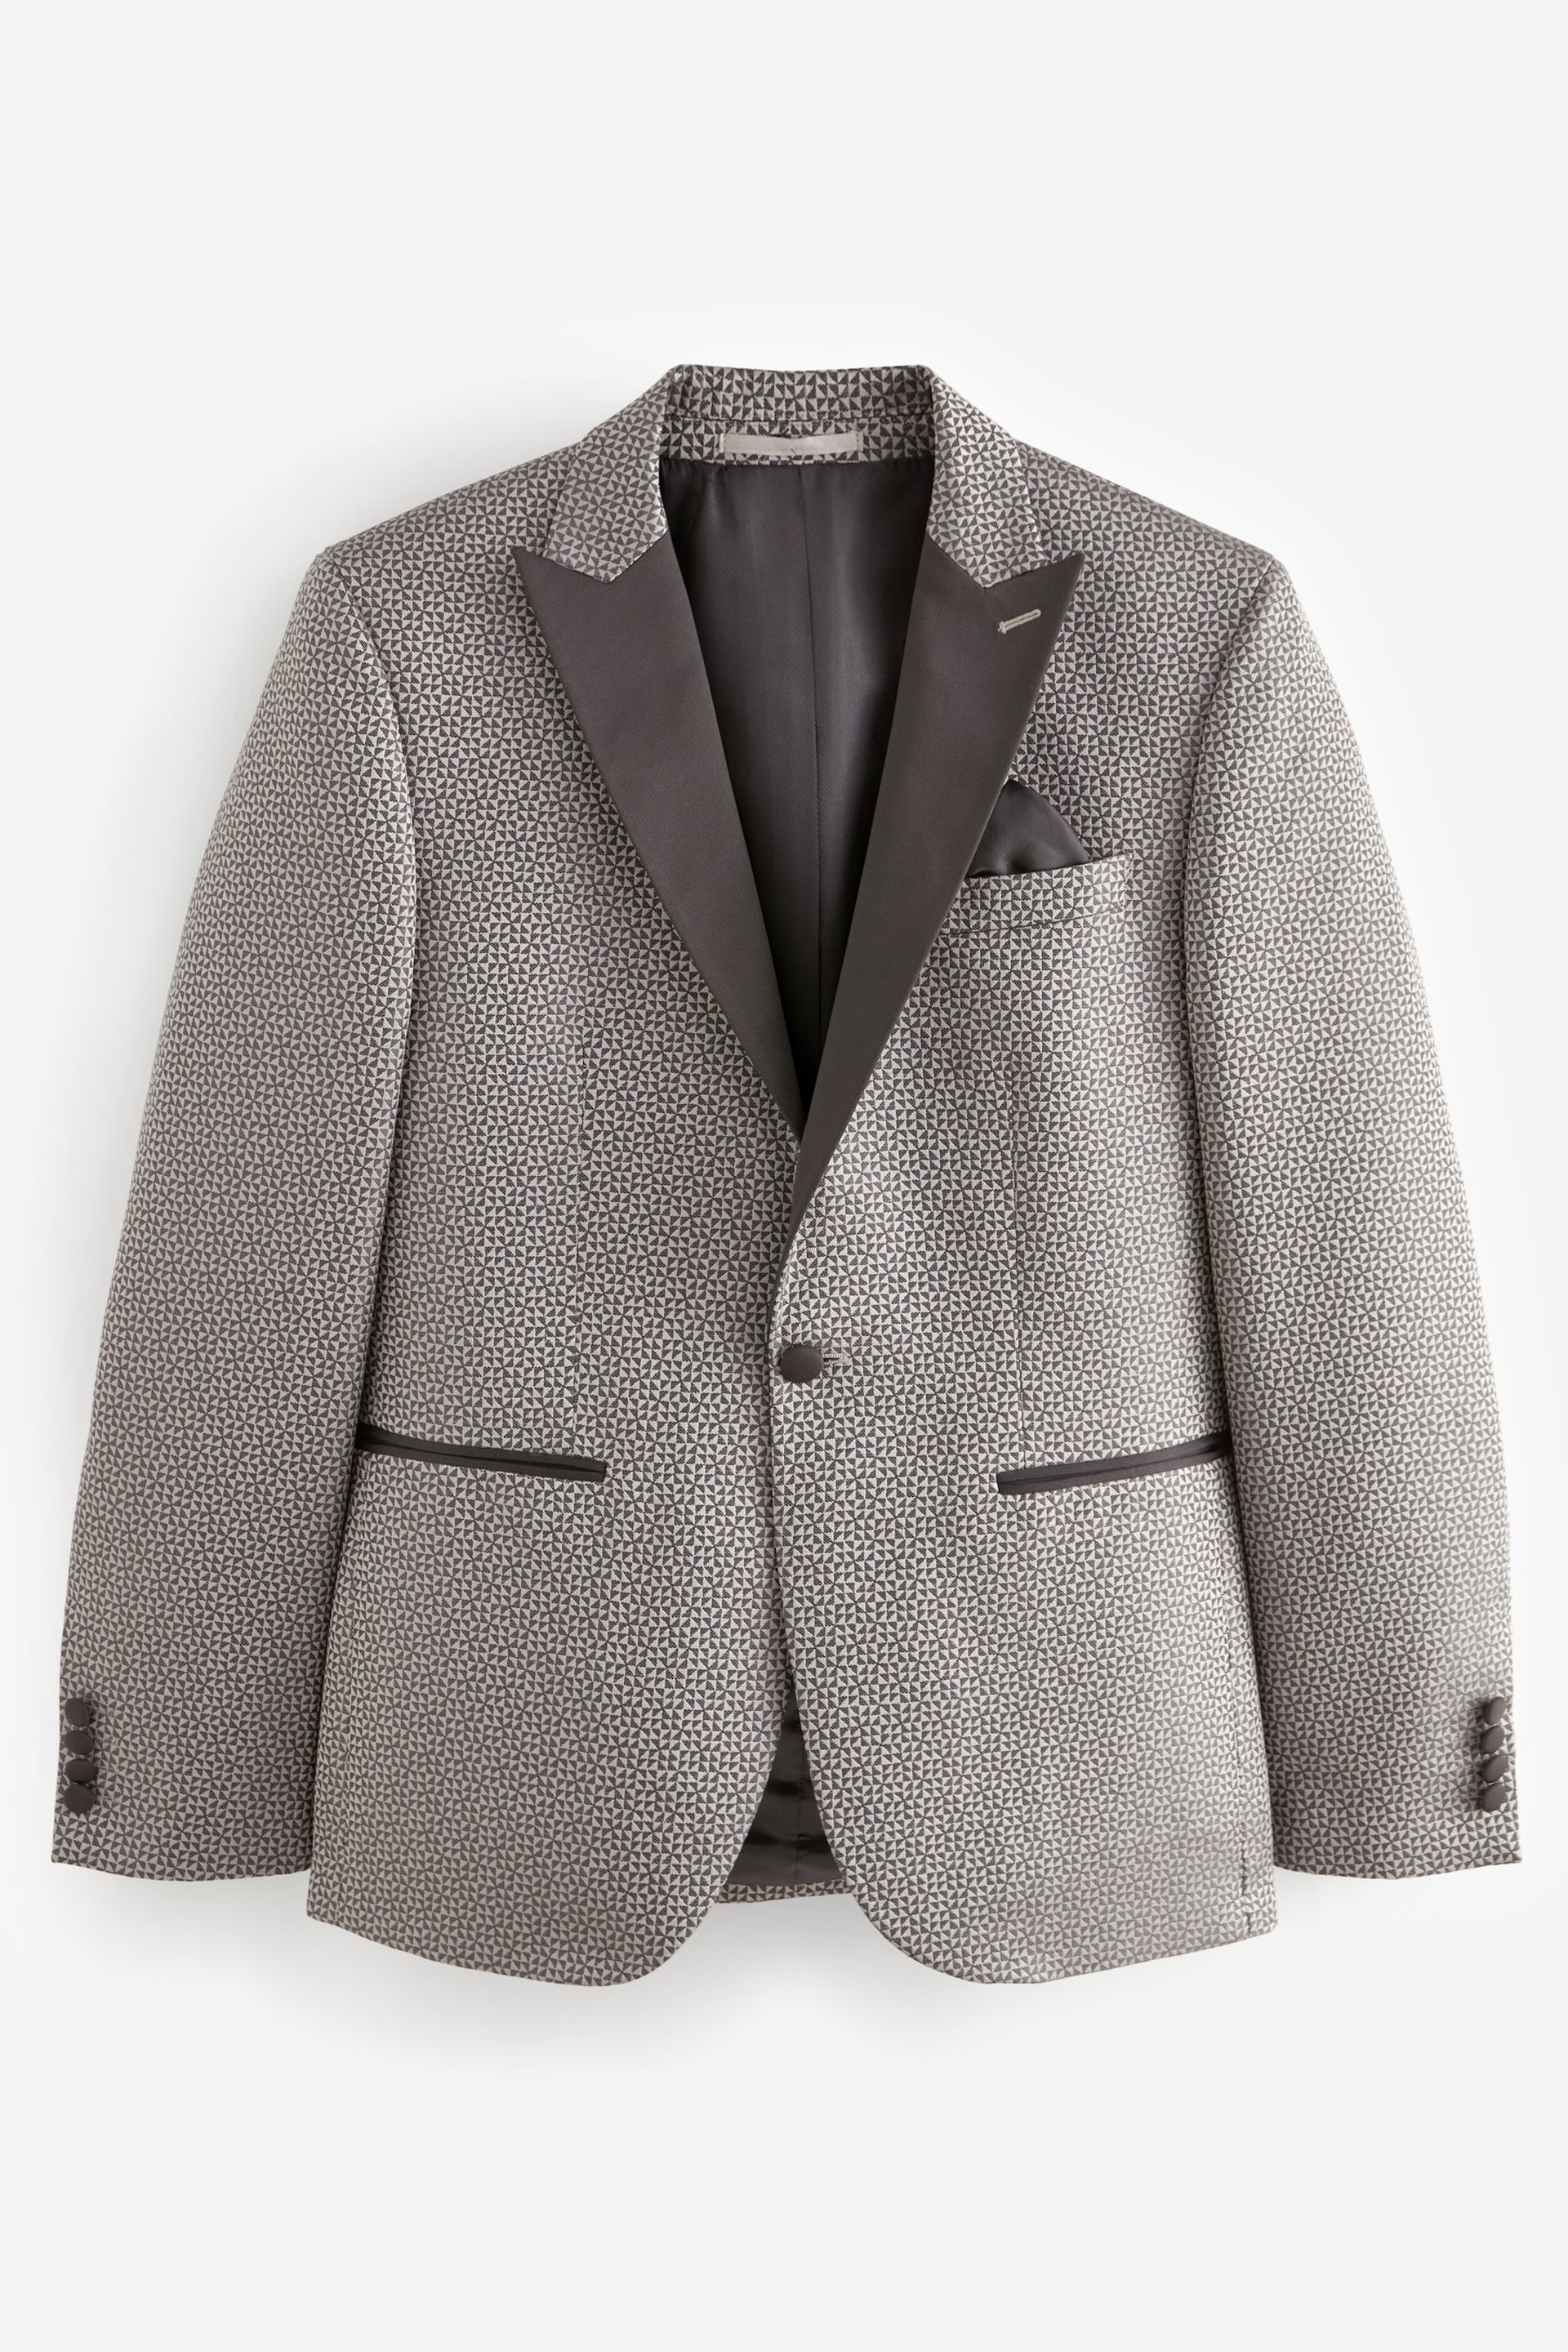 Charcoal Grey Slim Fit Satin Jacquard Blazer - Image 6 of 6